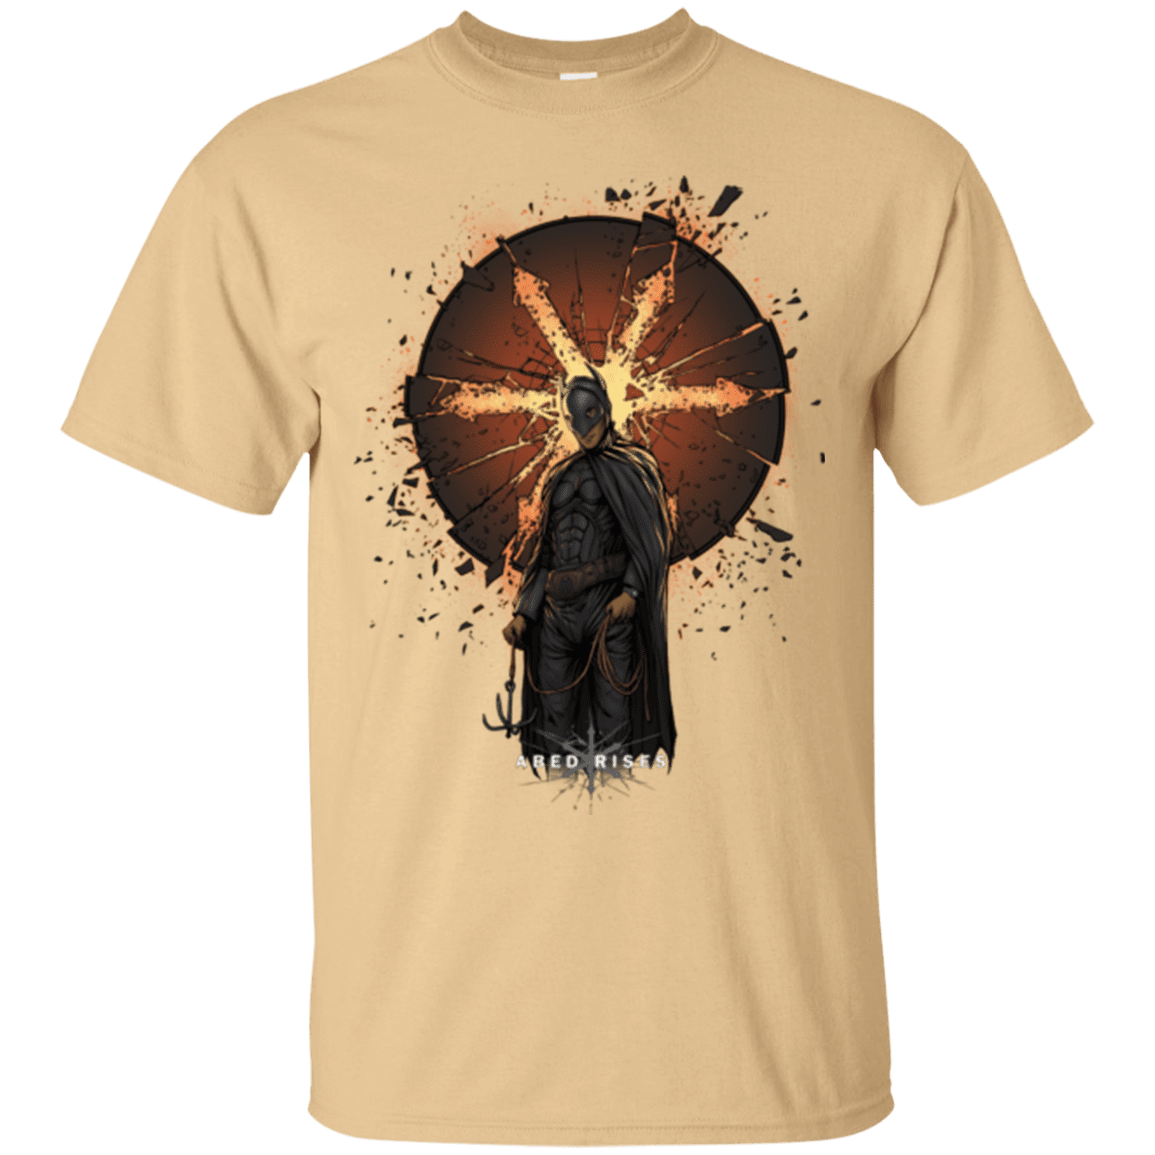 T-Shirts Vegas Gold / Small Abed Rises T-Shirt